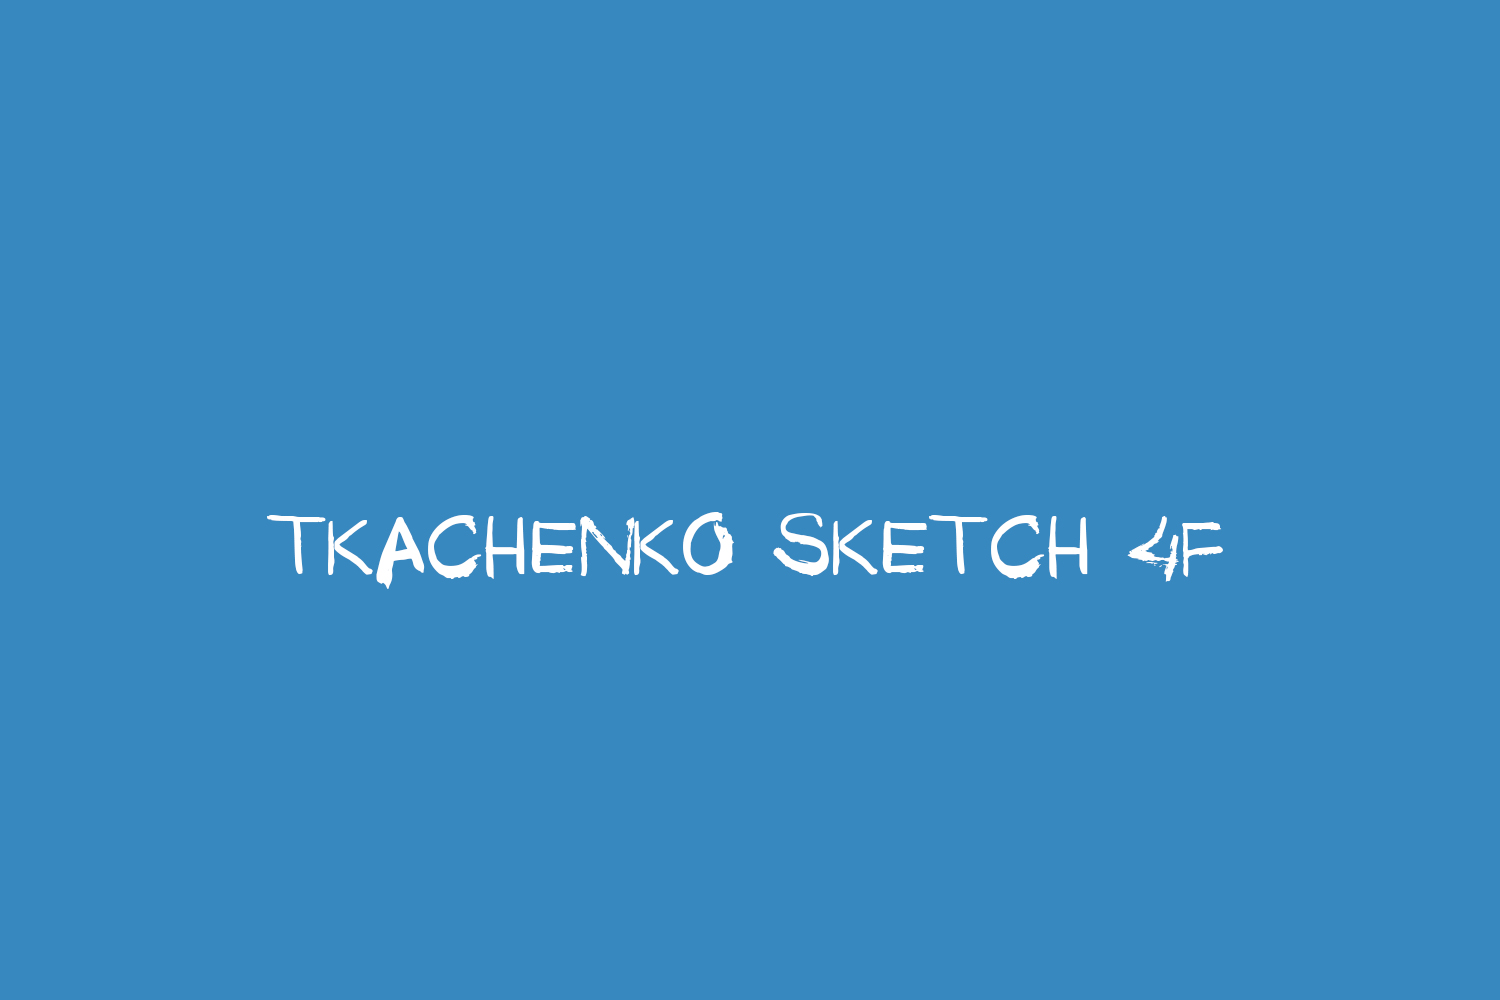 Tkachenko Sketch 4F